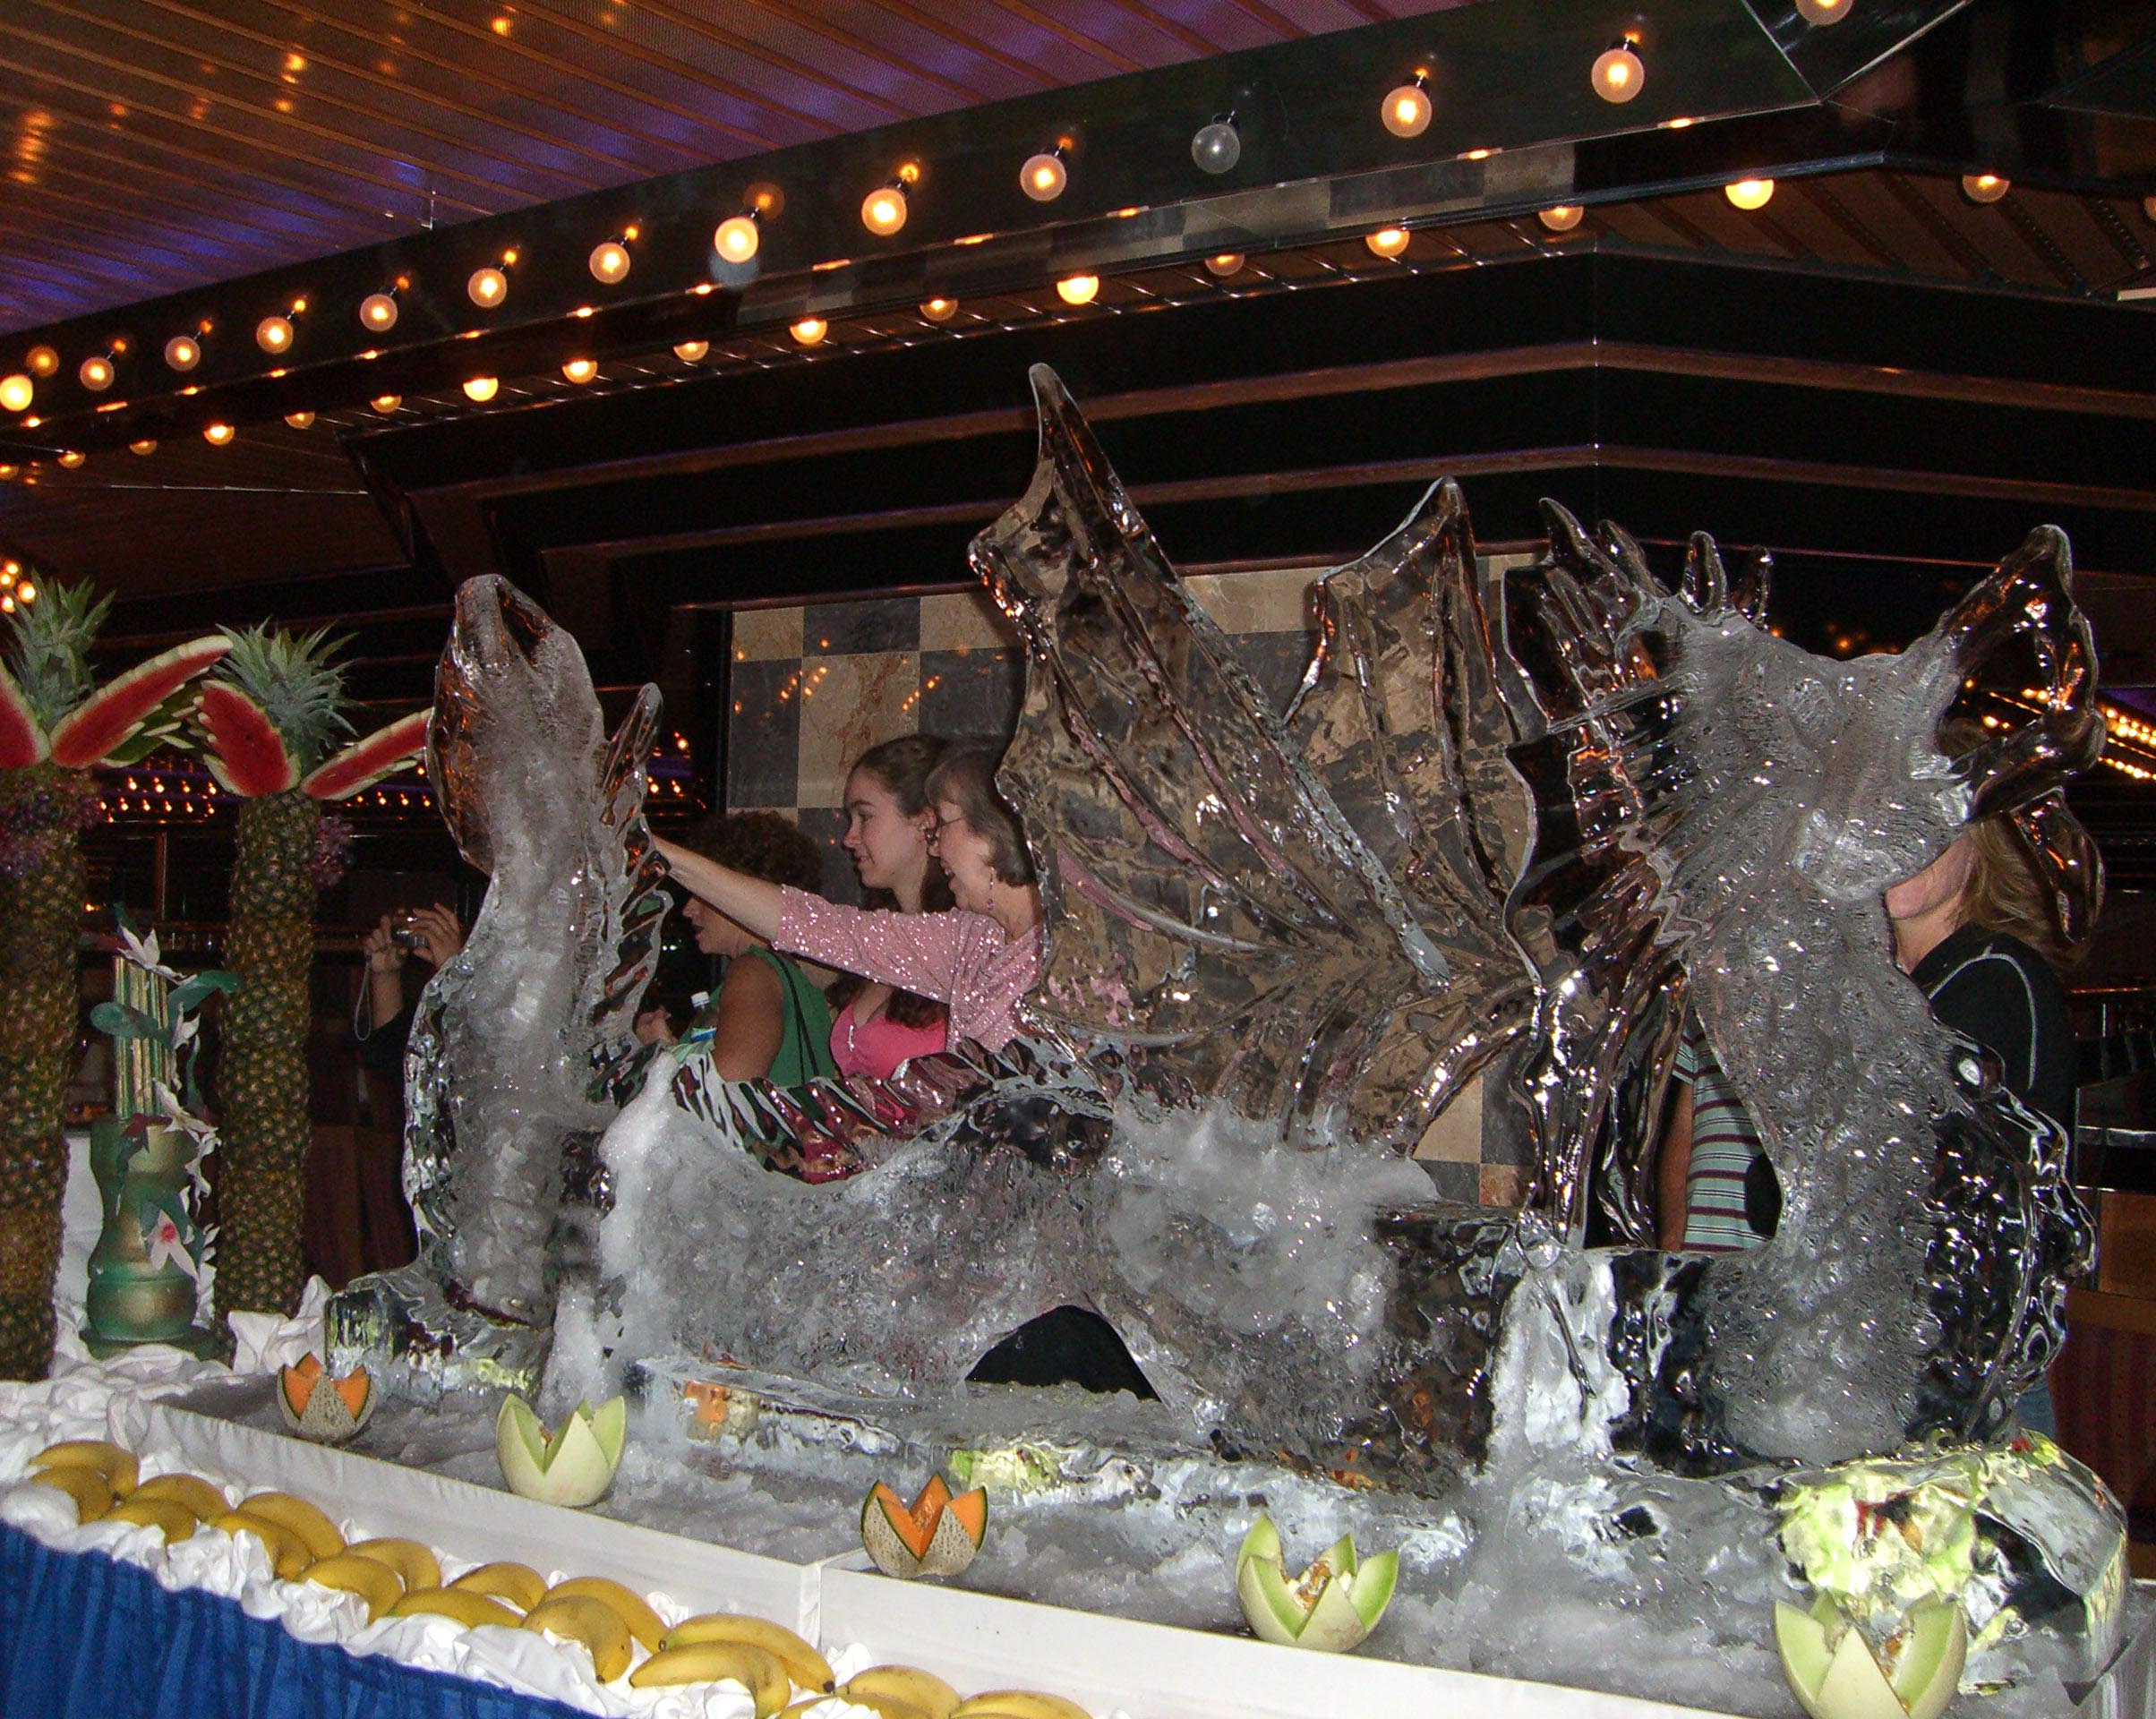 An ice sculpture of a dragon on a cruise ship grand gala buffet